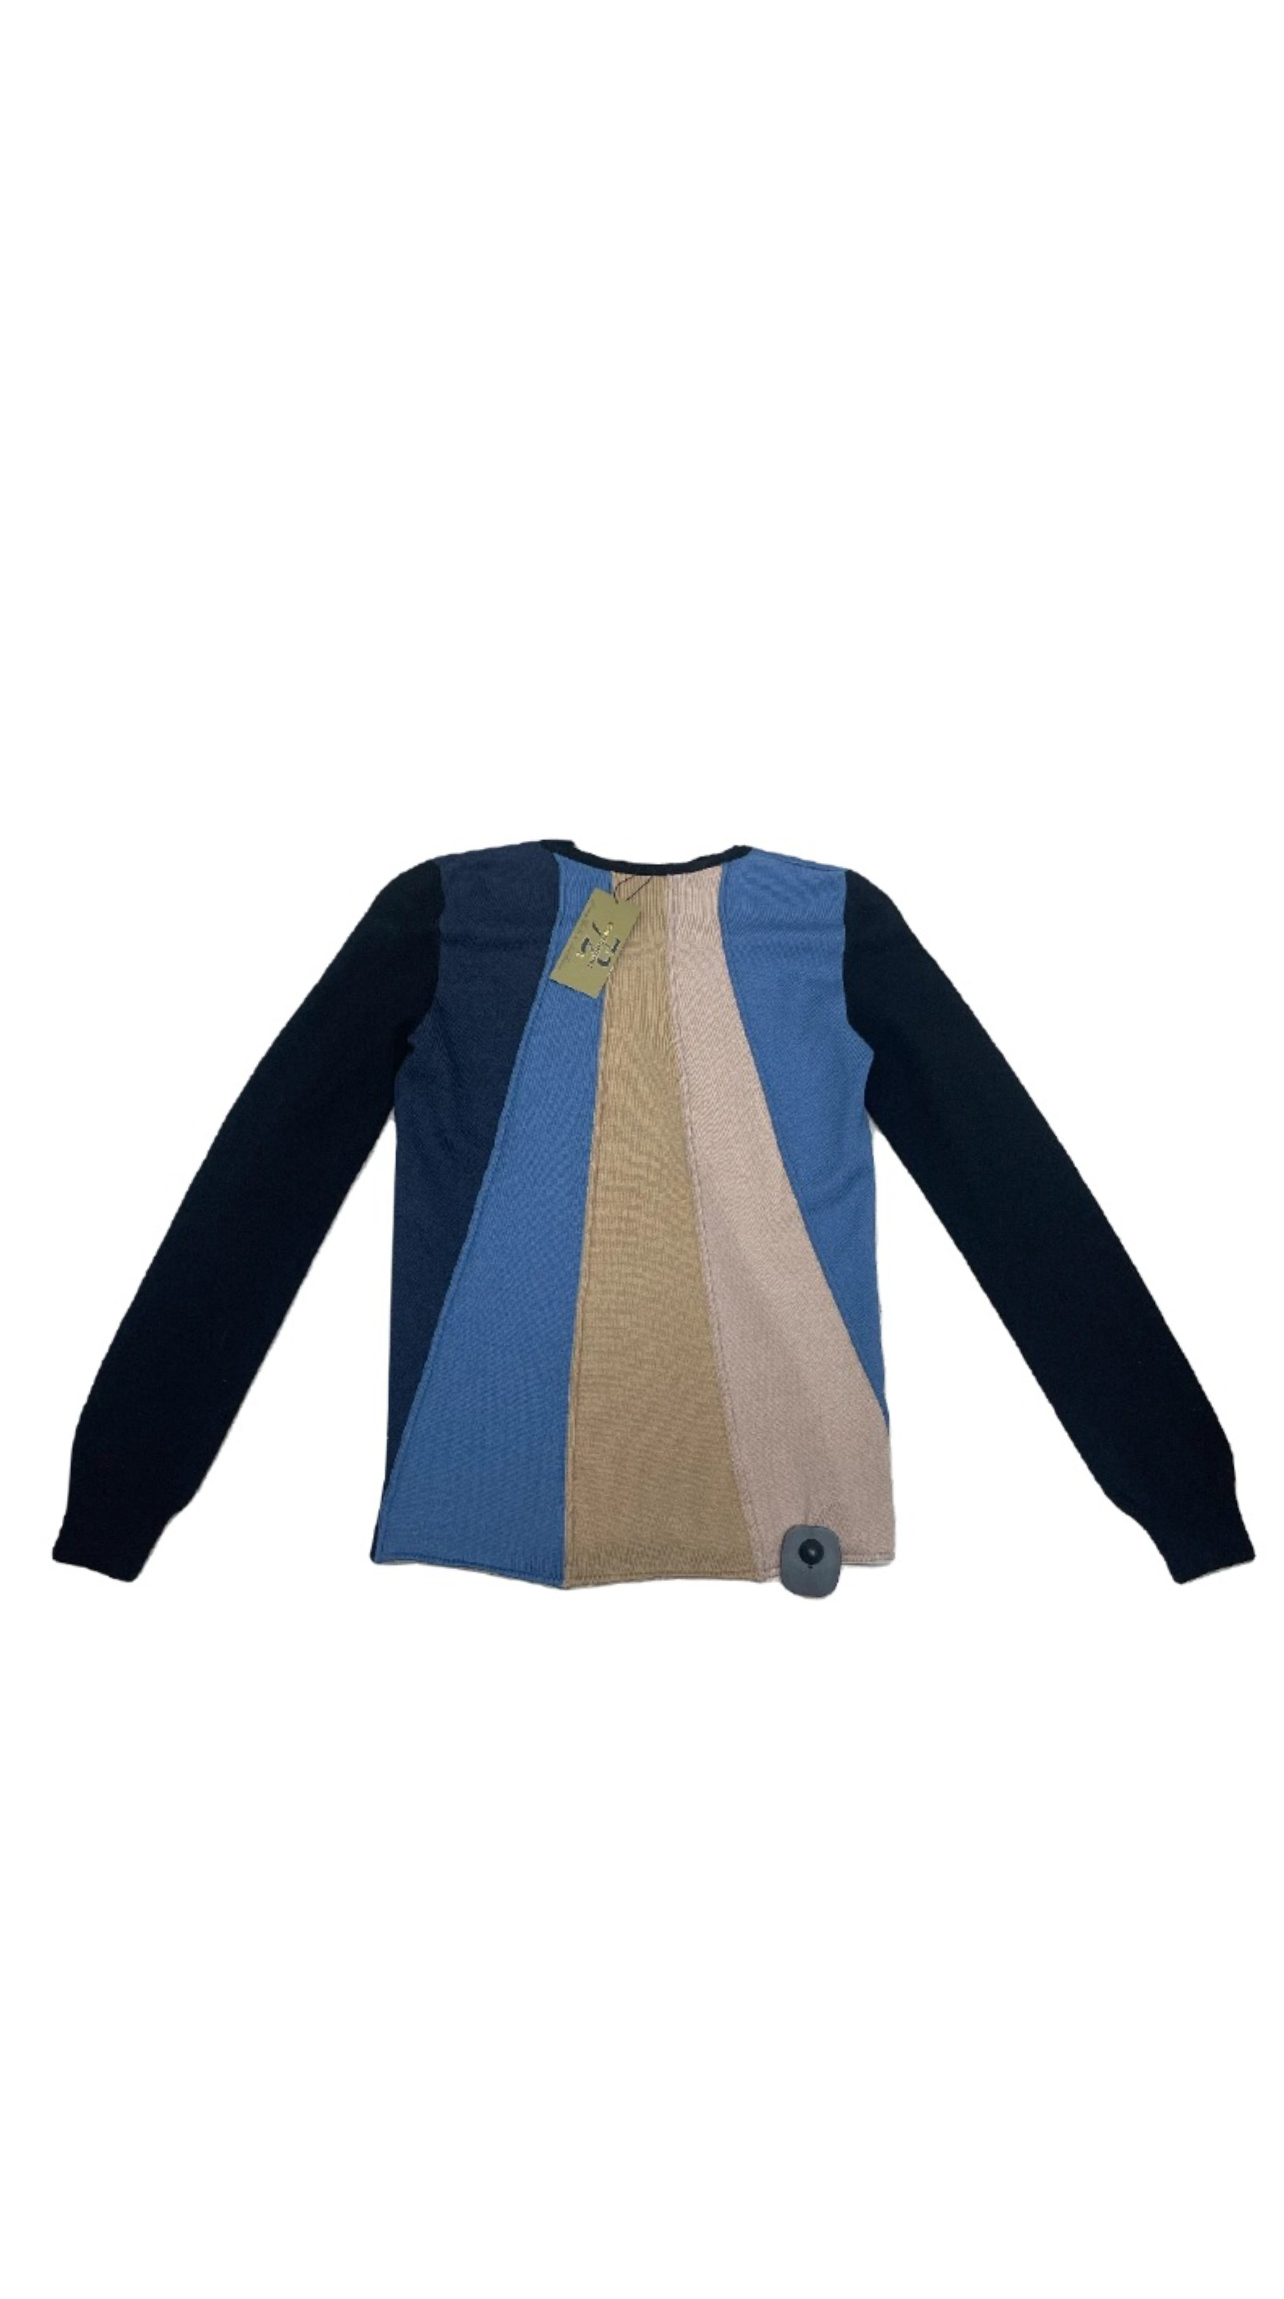 LOEWE Colorblock Sweater